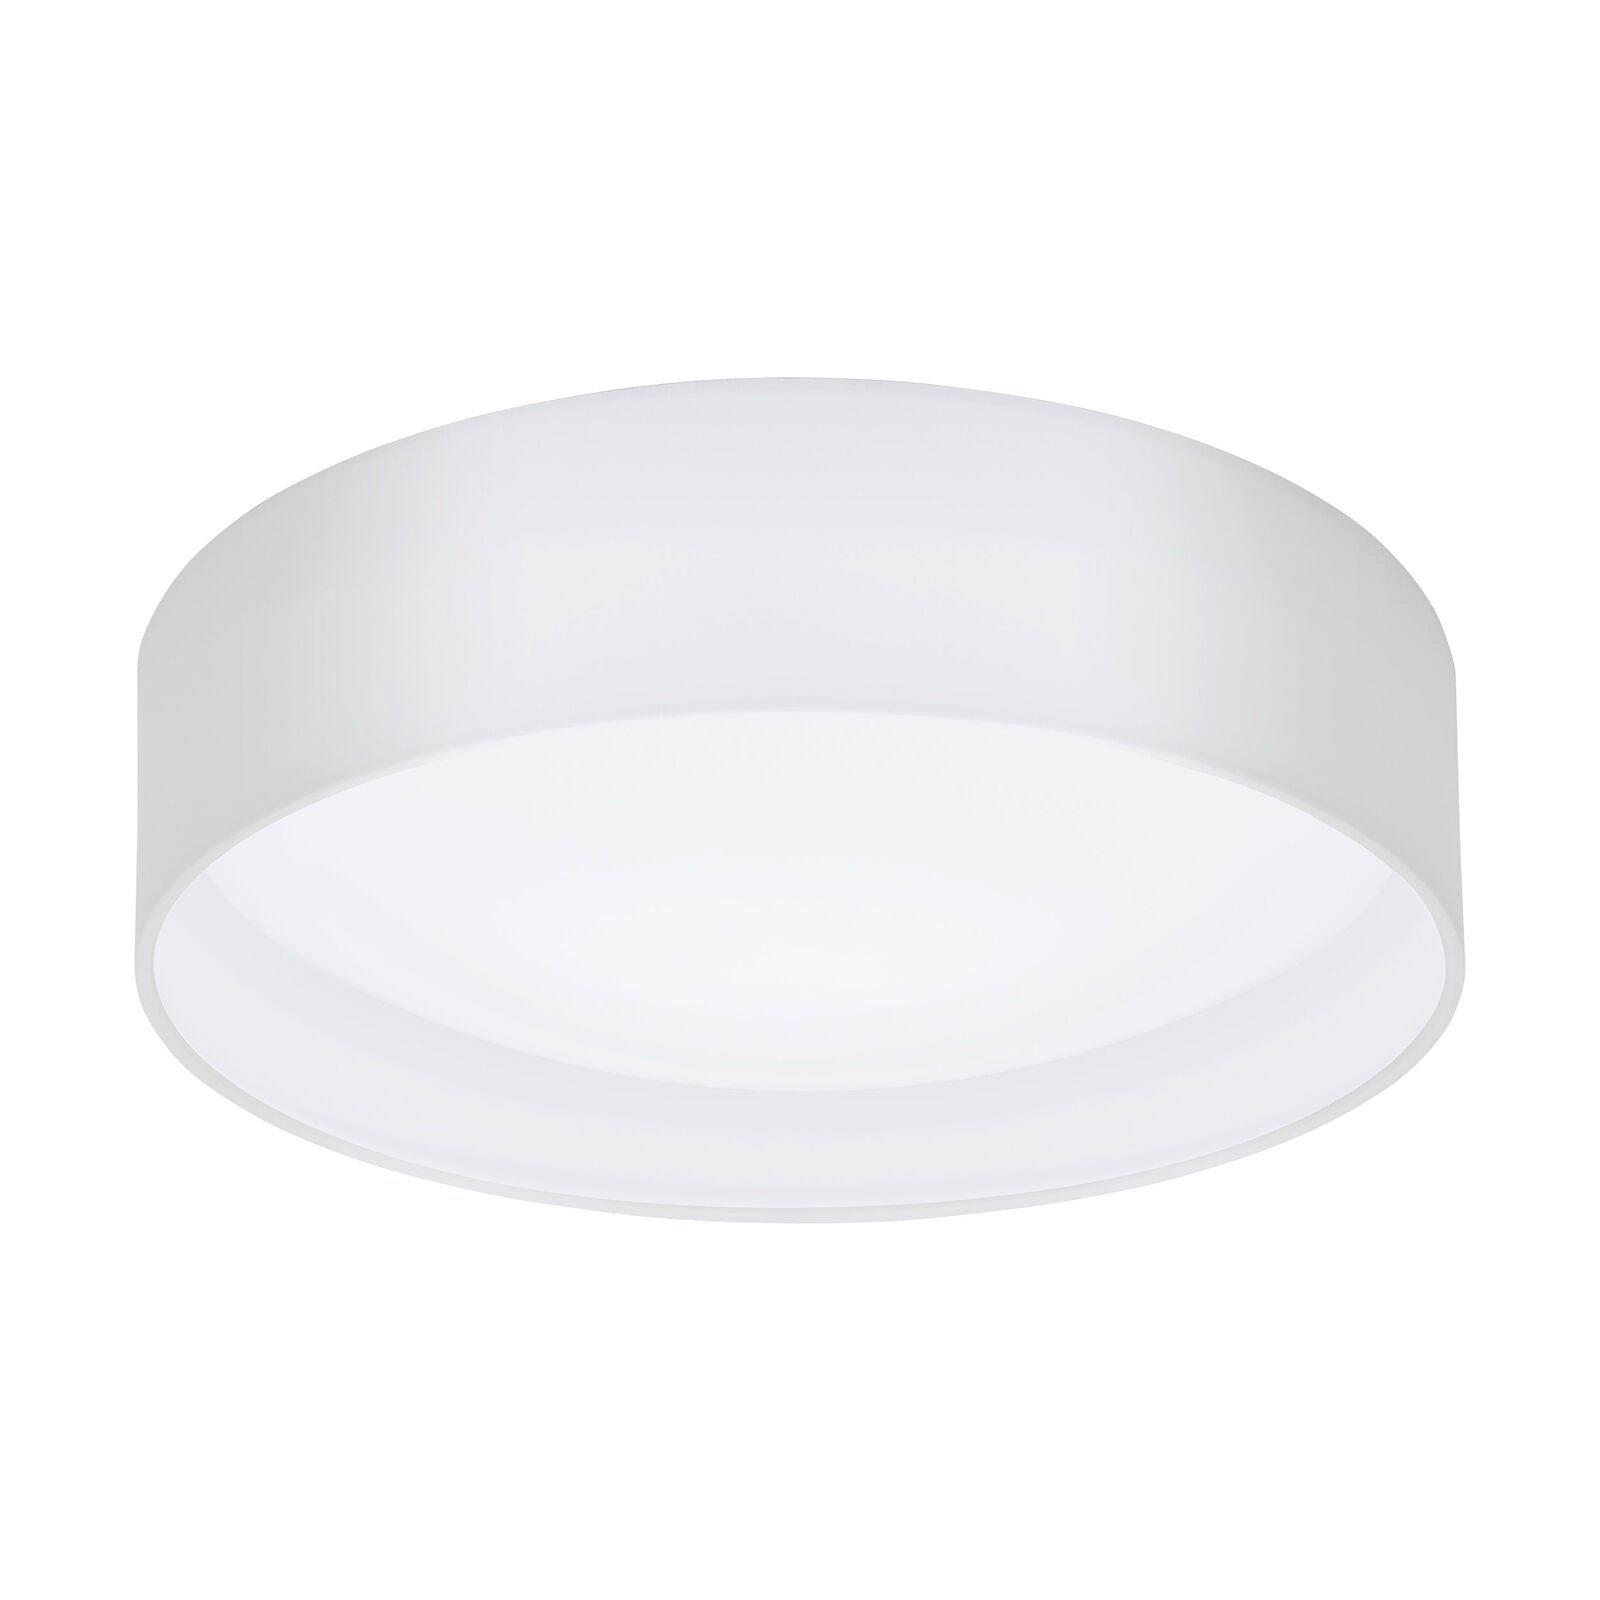 Flush Ceiling Light Colour White Shade White Fabric Bulb LED 11W Included